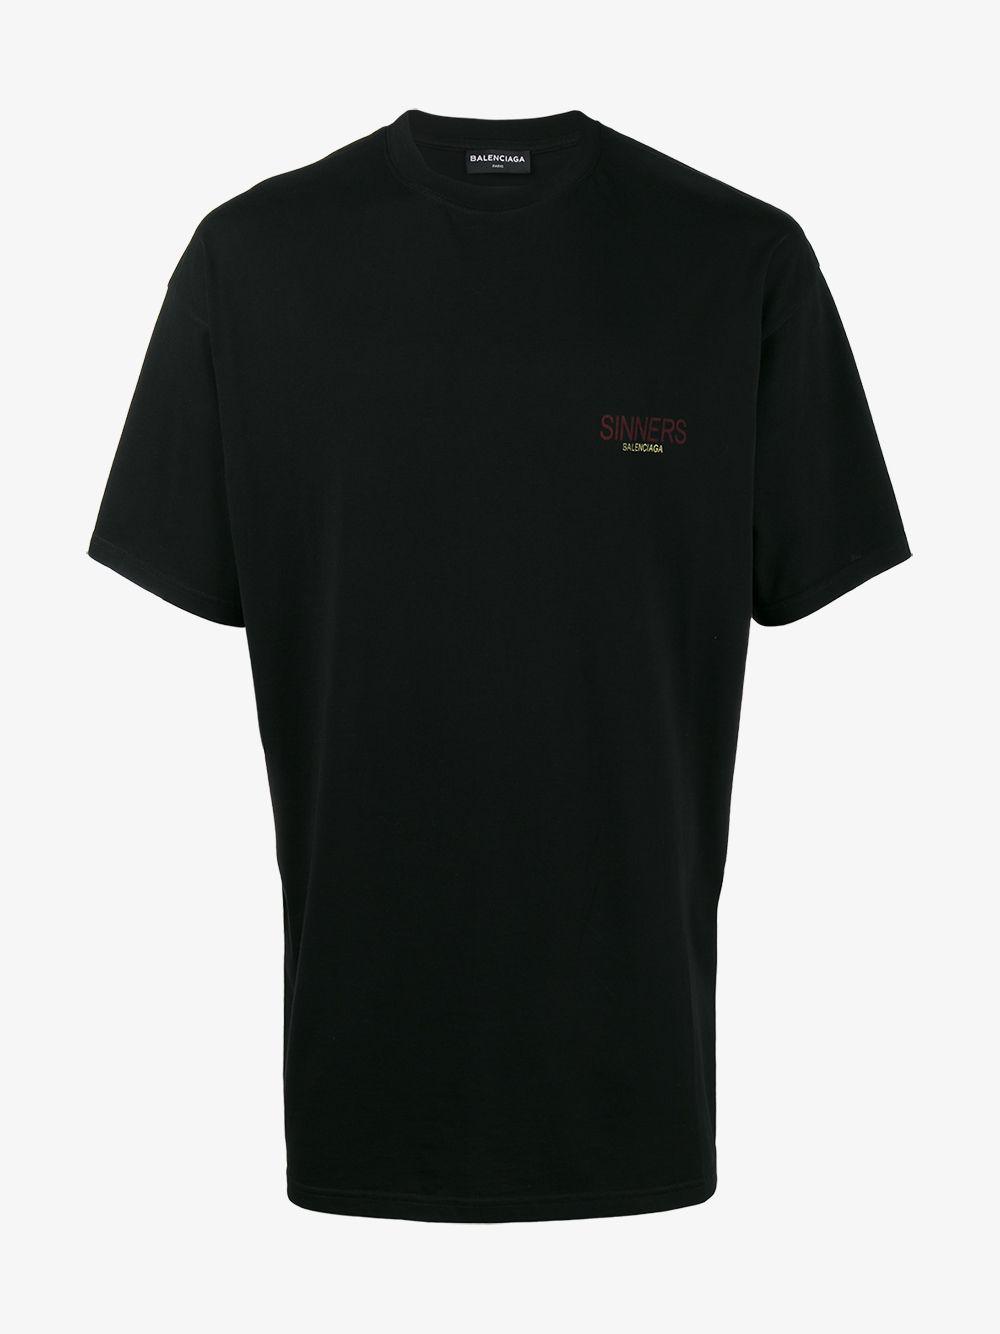 Balenciaga Sinners T-shirt in Black for Men | Lyst